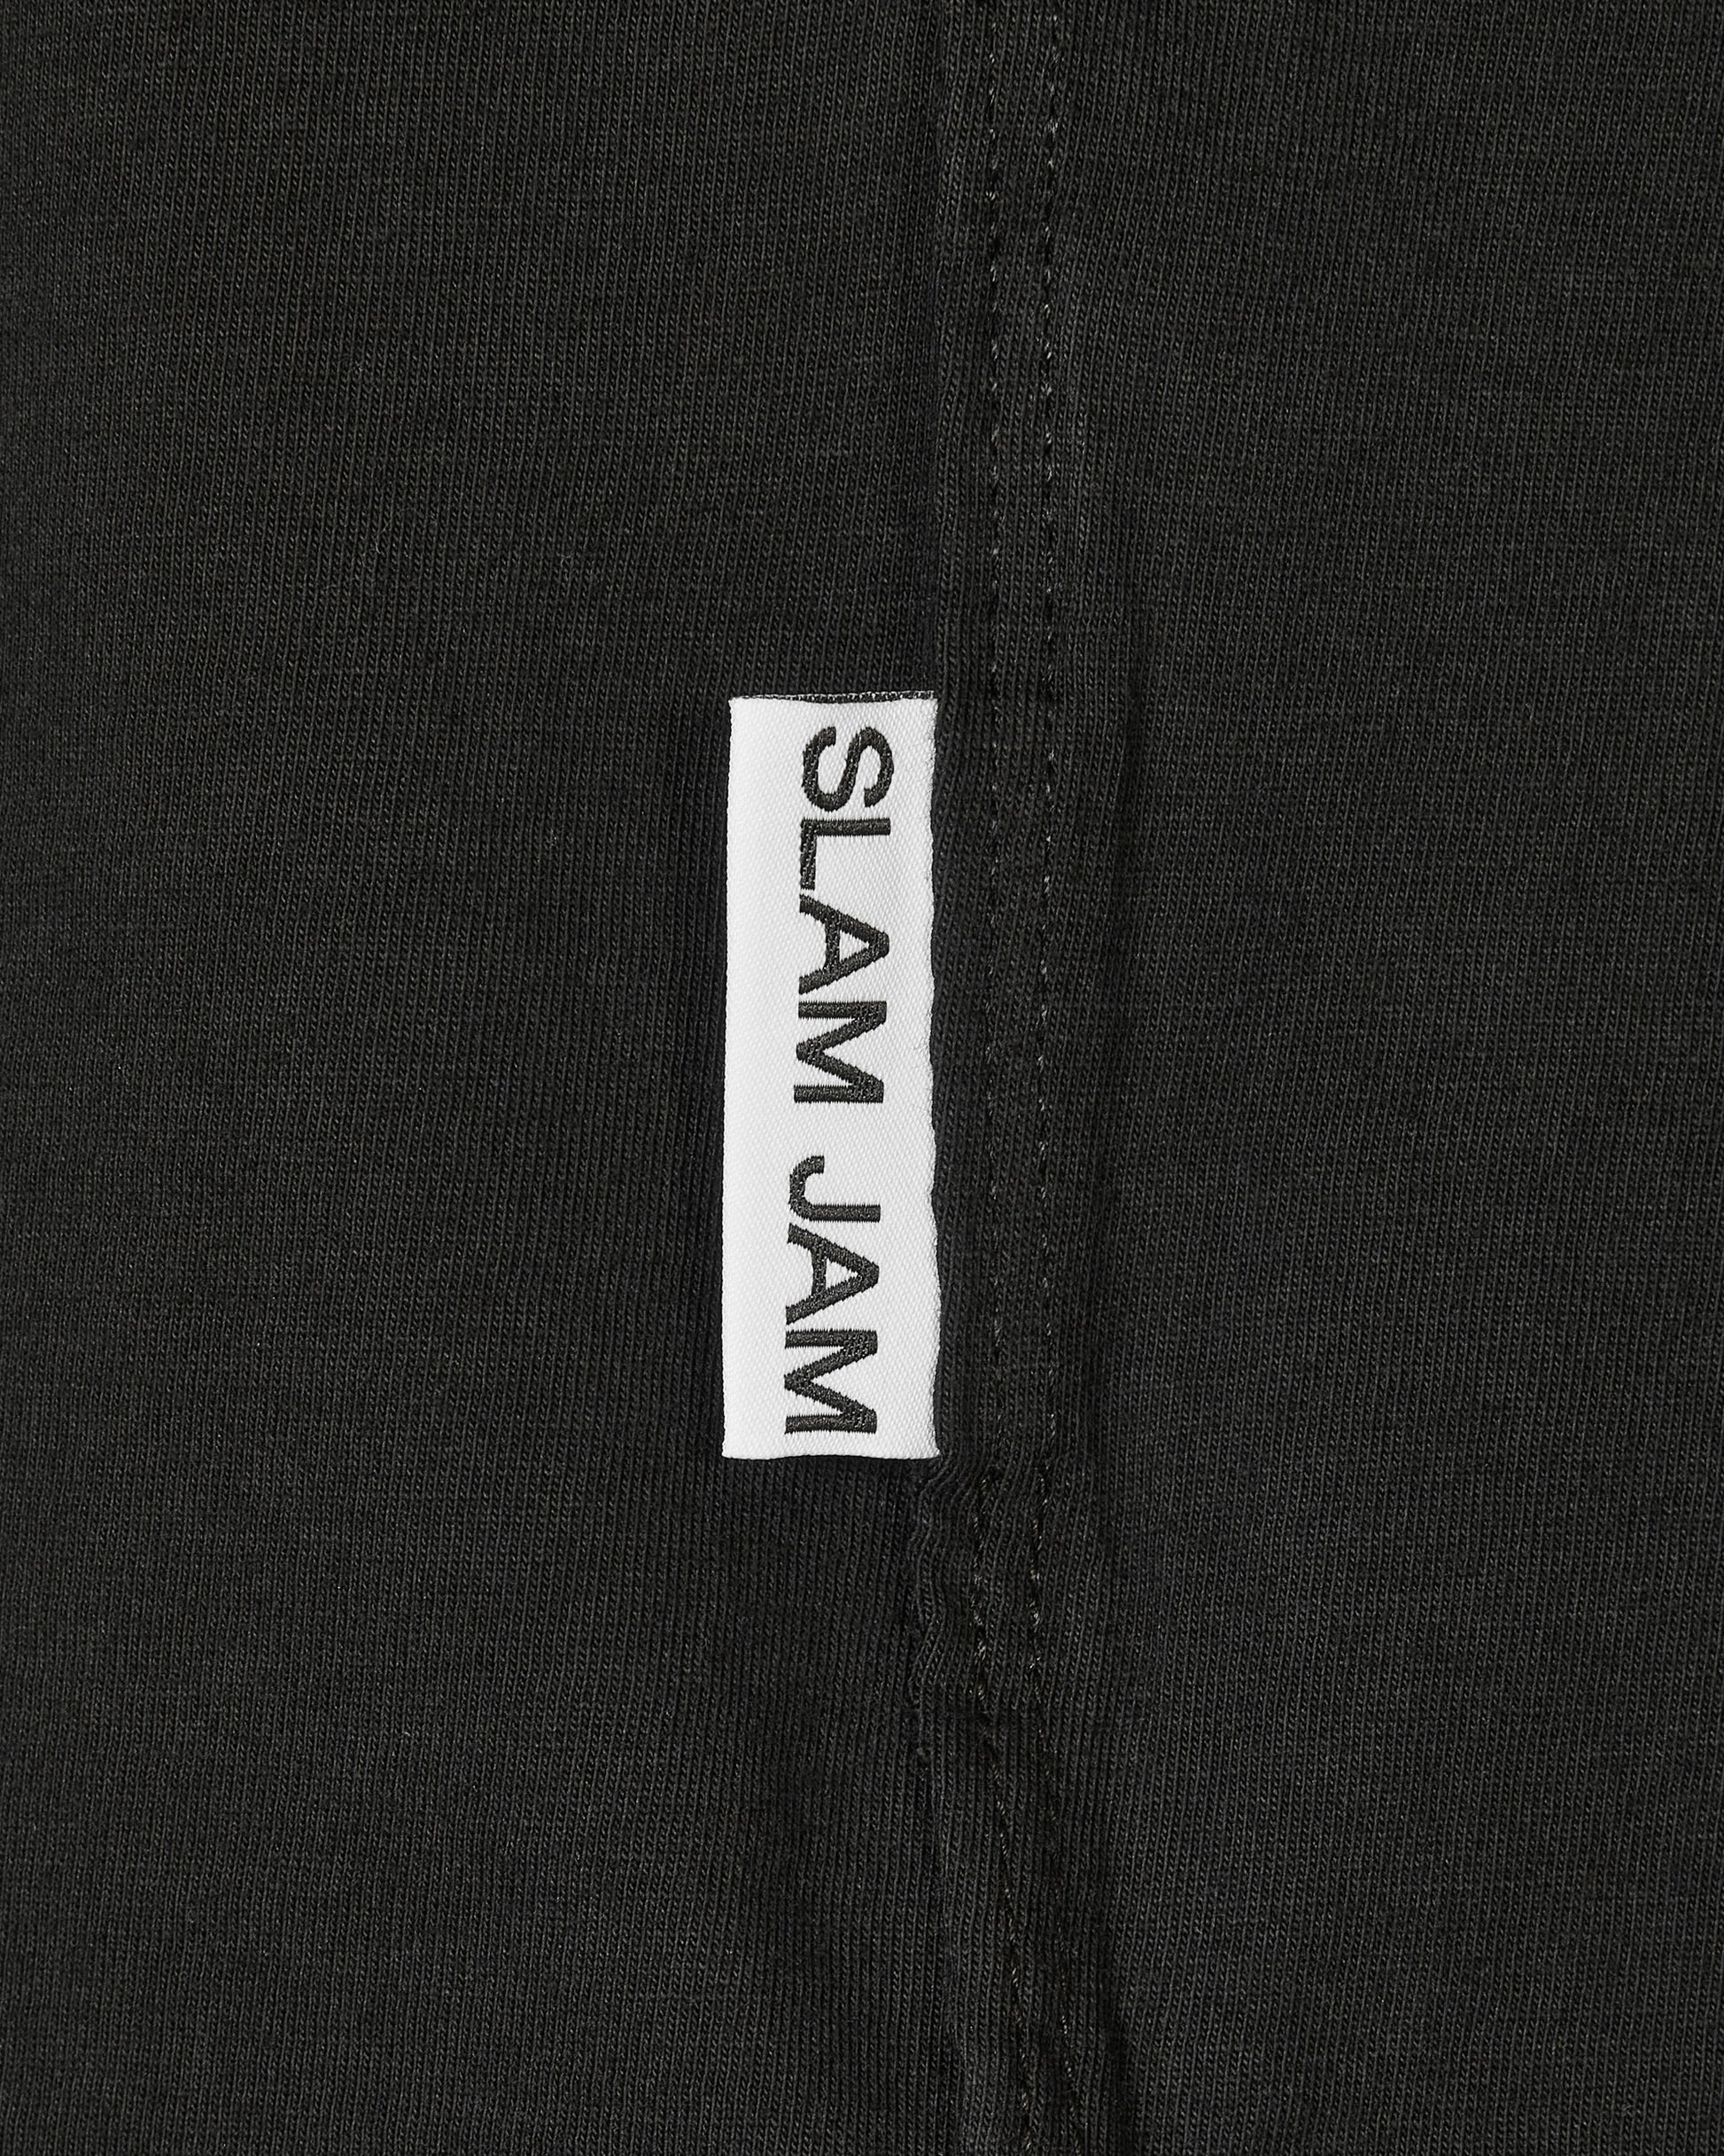 Slam Jam Bi-Pack White and Black White Black T-Shirts Shortsleeve SBM0022FA14 WTHBL01